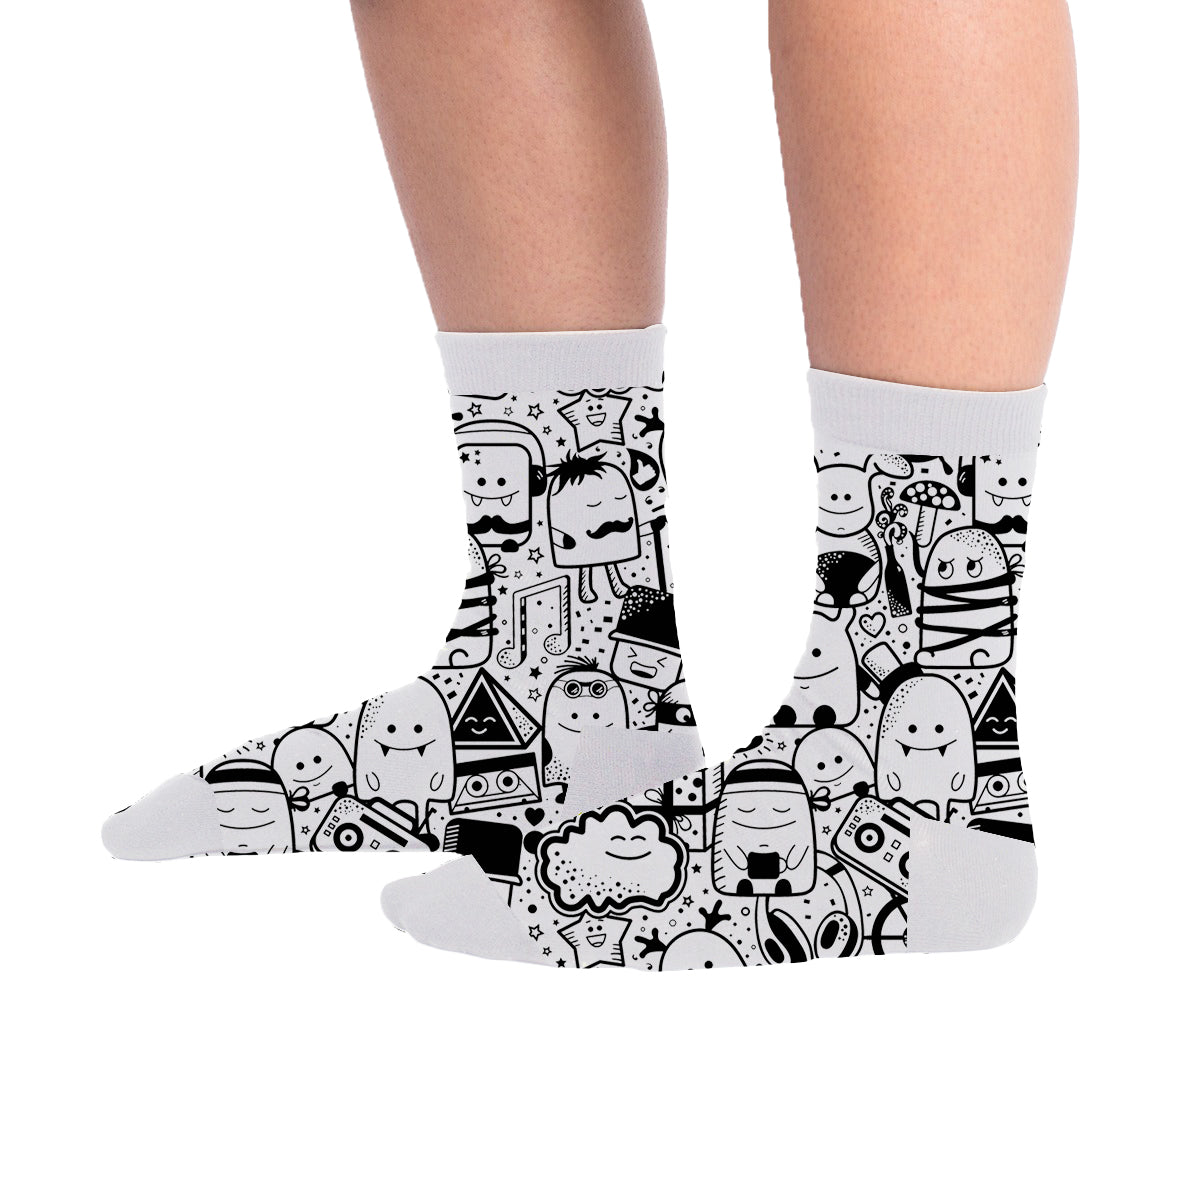 Doodles Unisex Socks - Multicolor -One Size